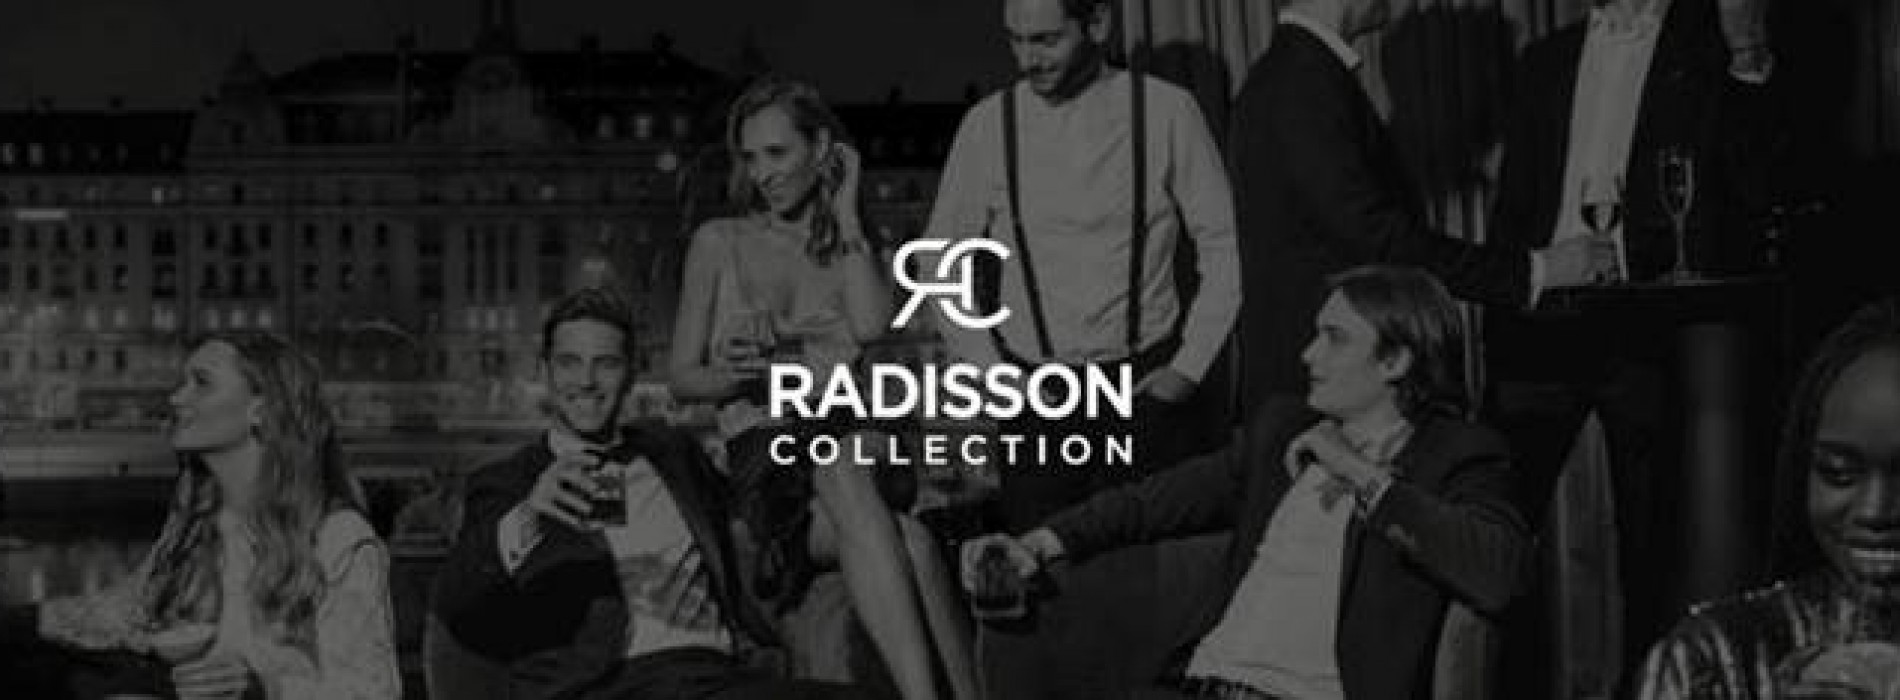 Radisson Hotel Group brings Radisson Collection